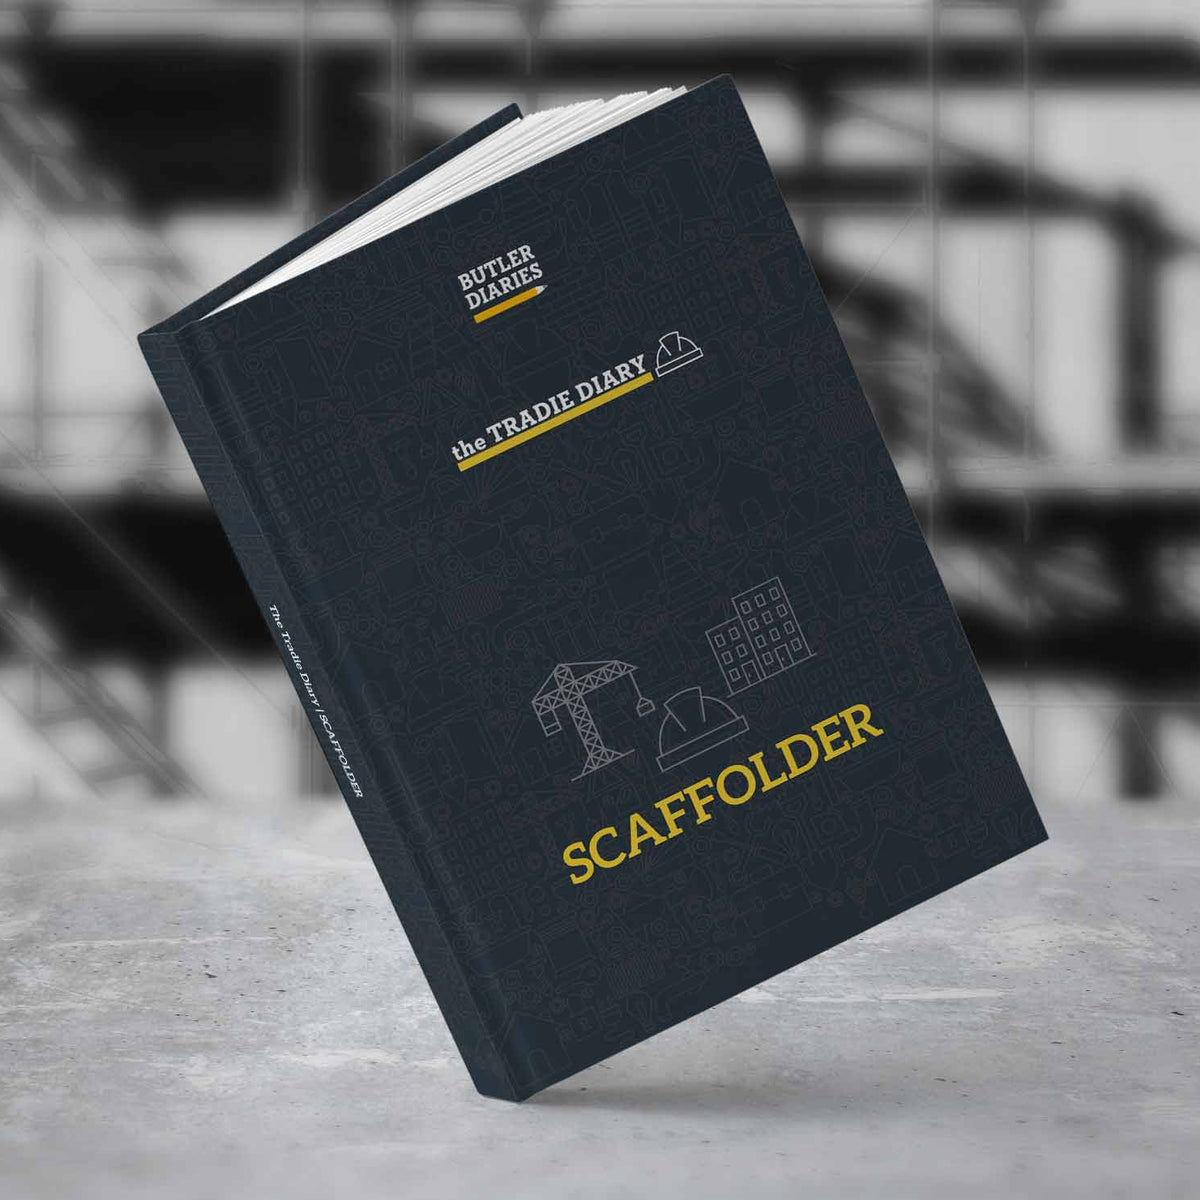 2023 The Tradie Diary: SCAFFOLDER - Butler Diaries